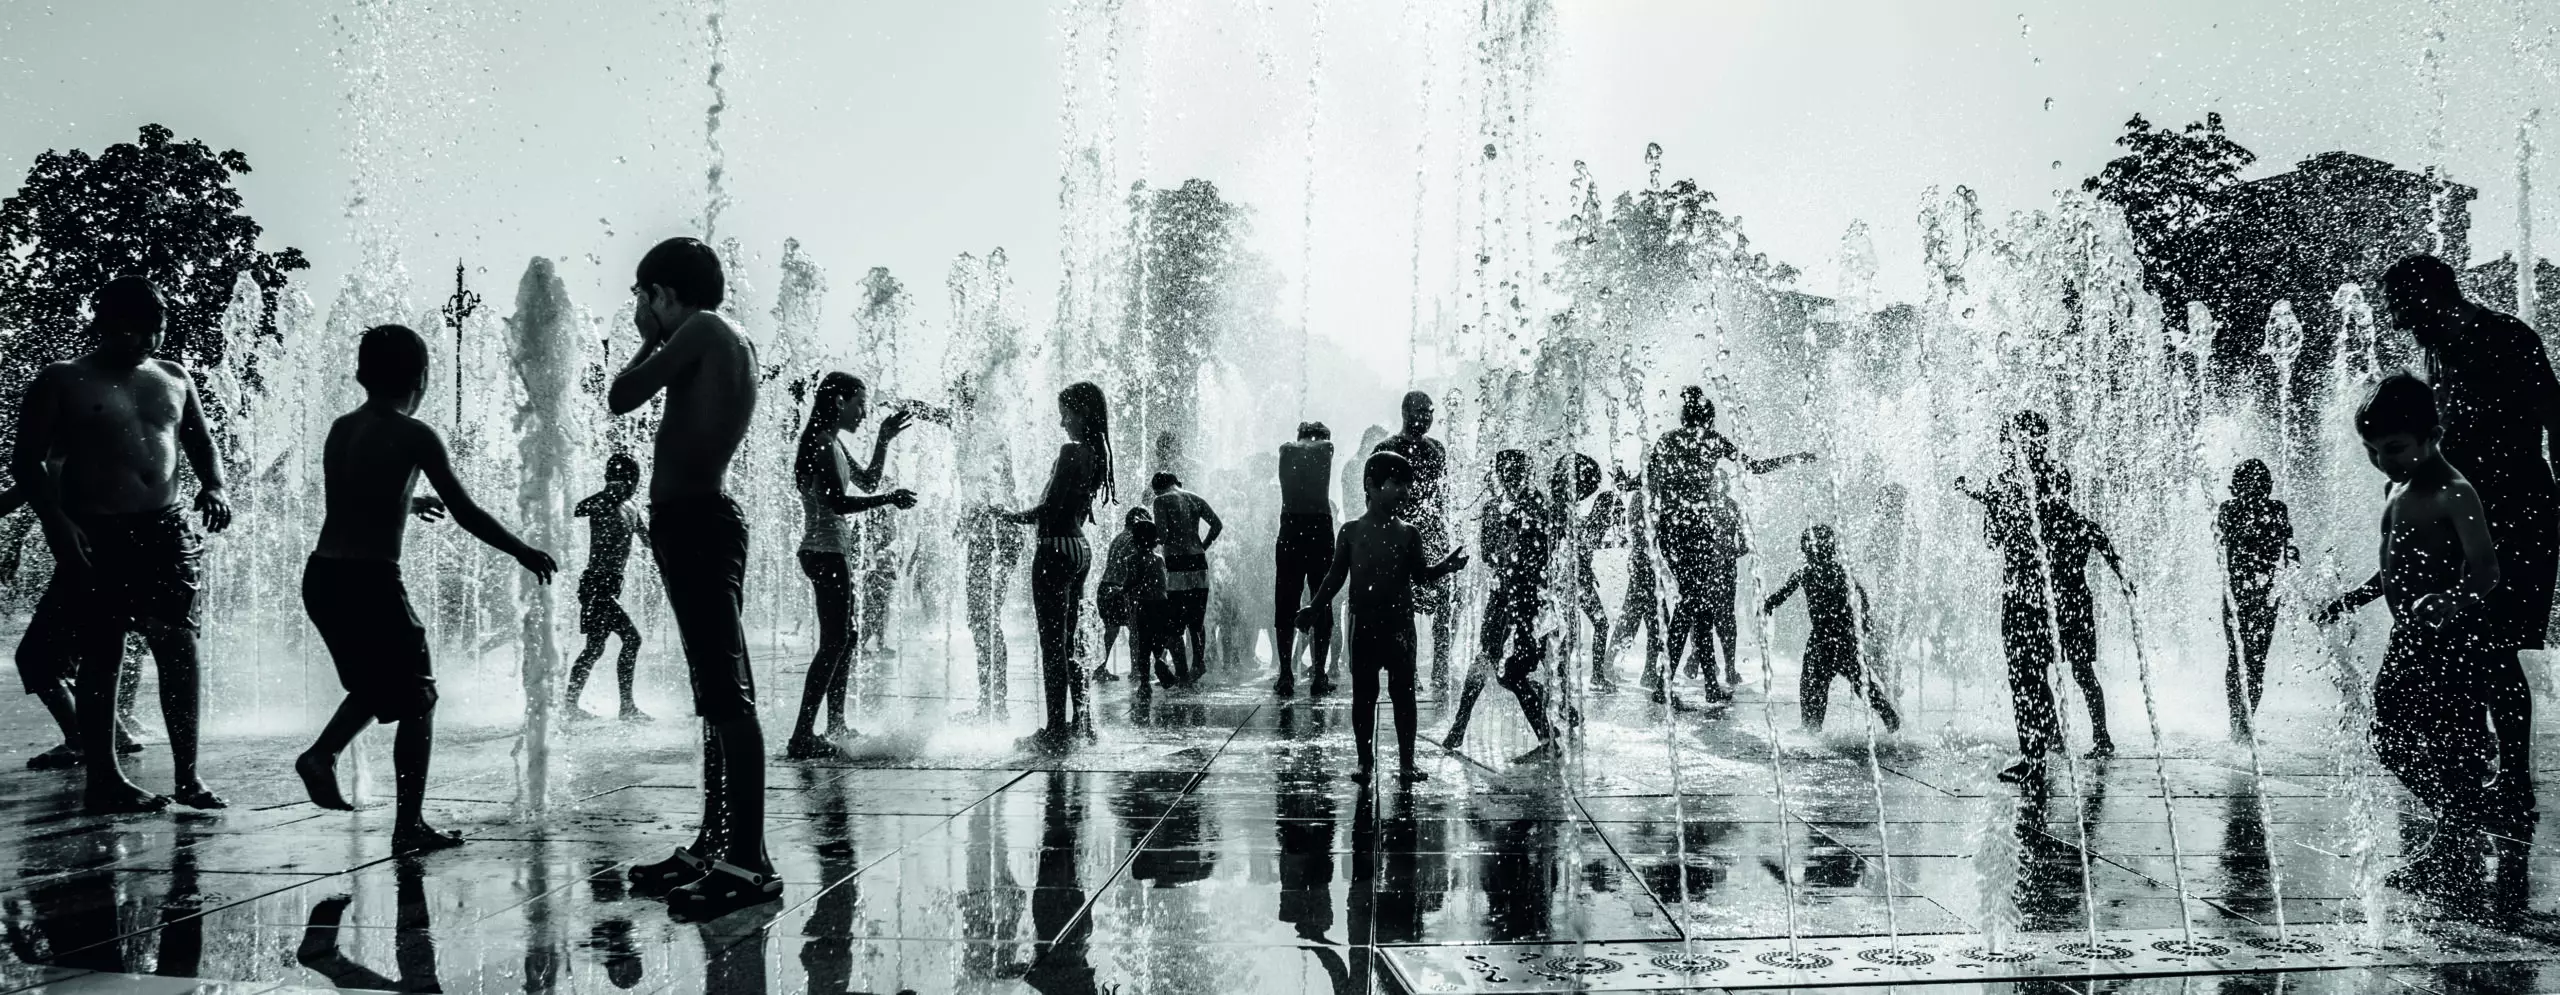 Wandbild (5819) Water Fun by devrim ünlü,1x.com präsentiert: Menschen,Wasser,Kreatives,Kinder,Menschengruppen,Wasserspiegelungen,Sonstiges Kreatives